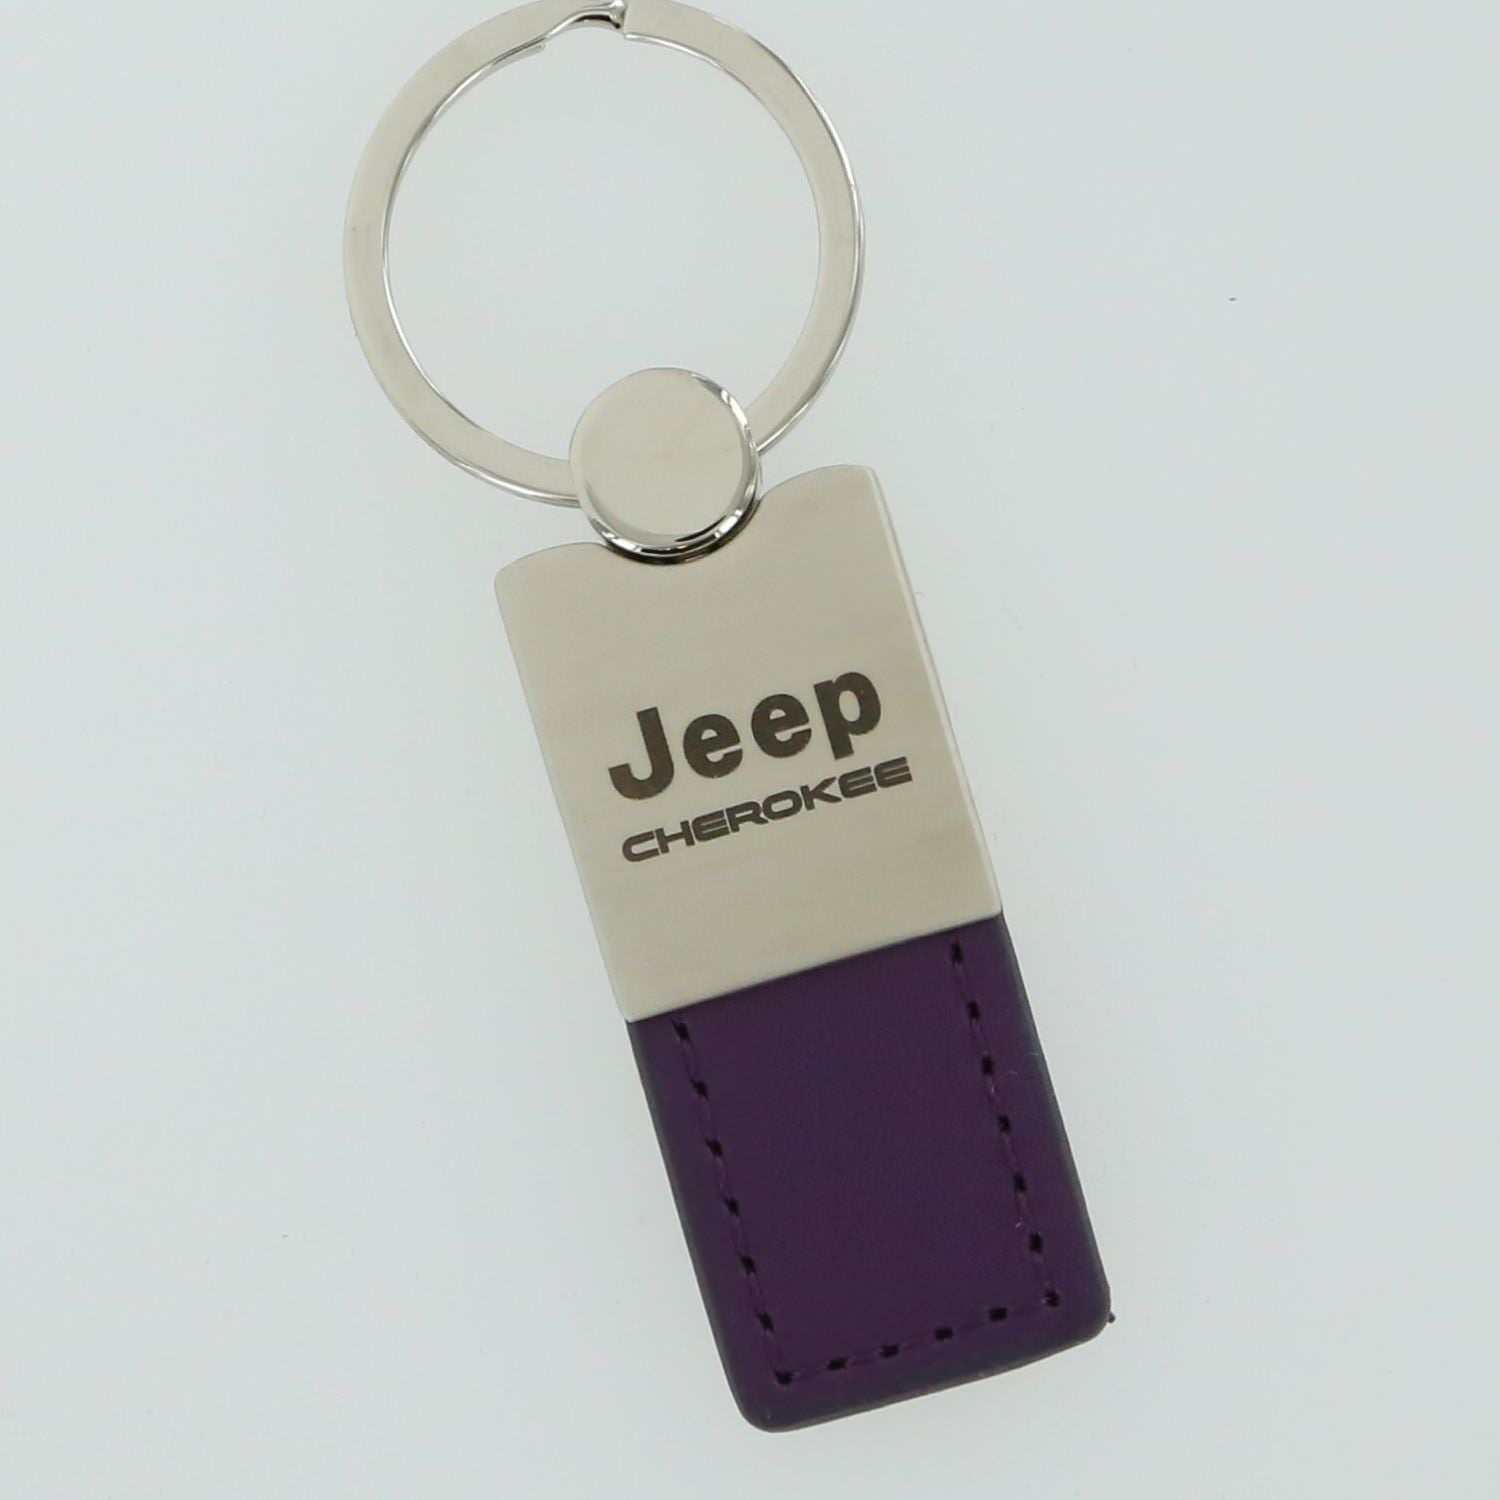 Jeep Cherokee Key Chain